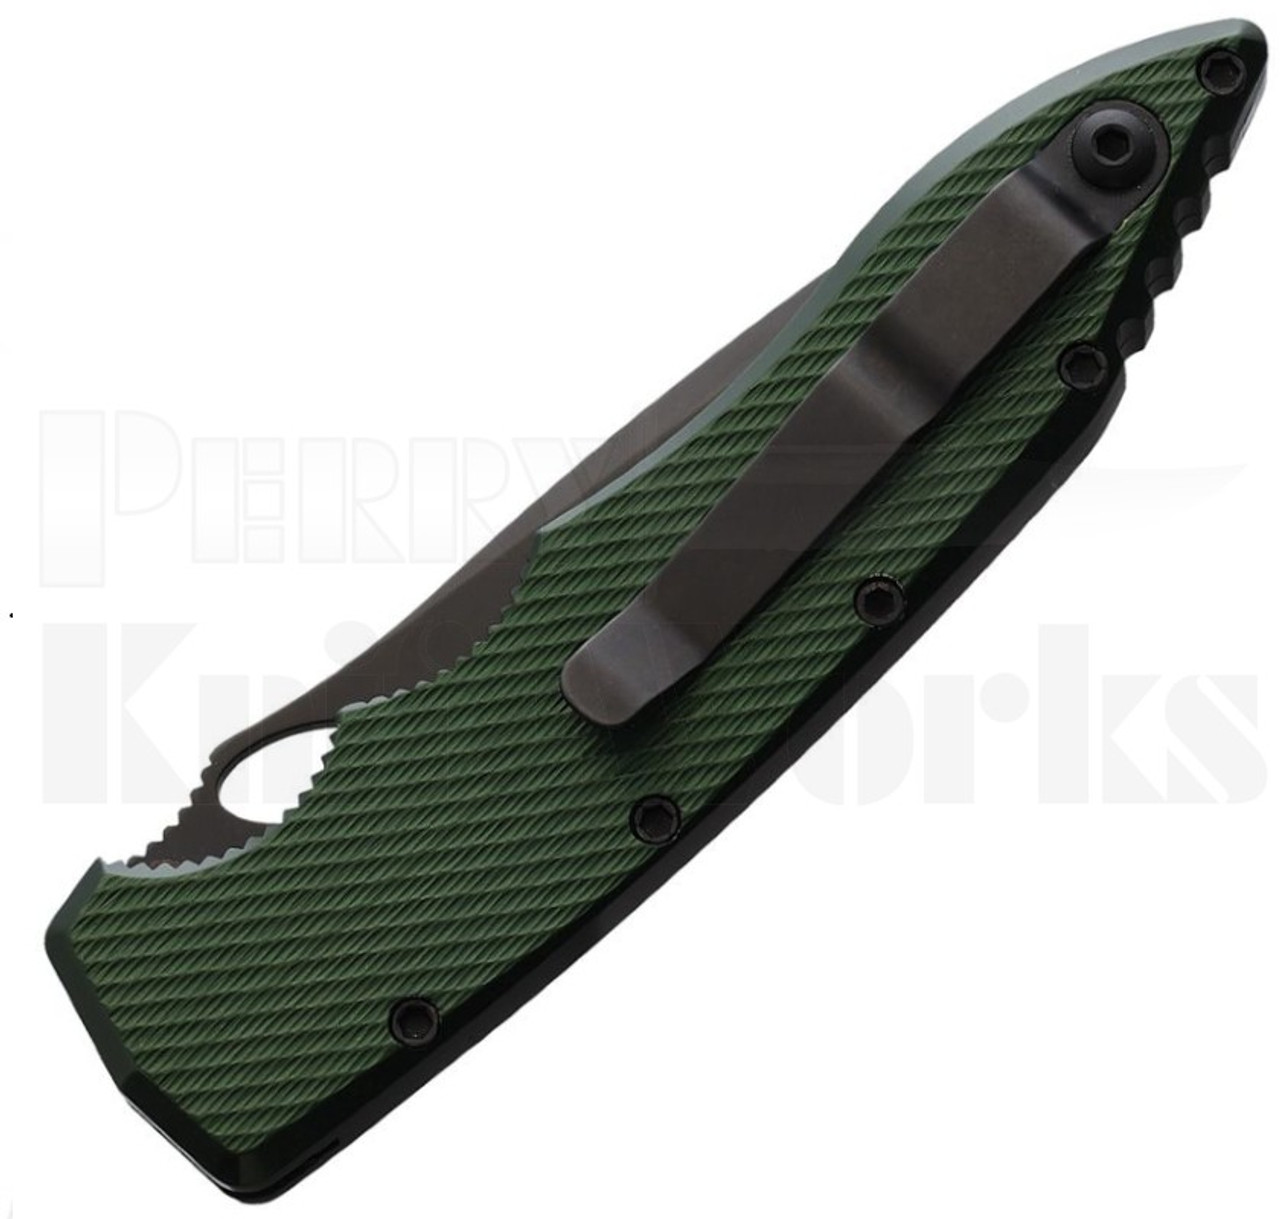 Piranha Mini Predator Automatic Knife Green P-11 l Tactical Black